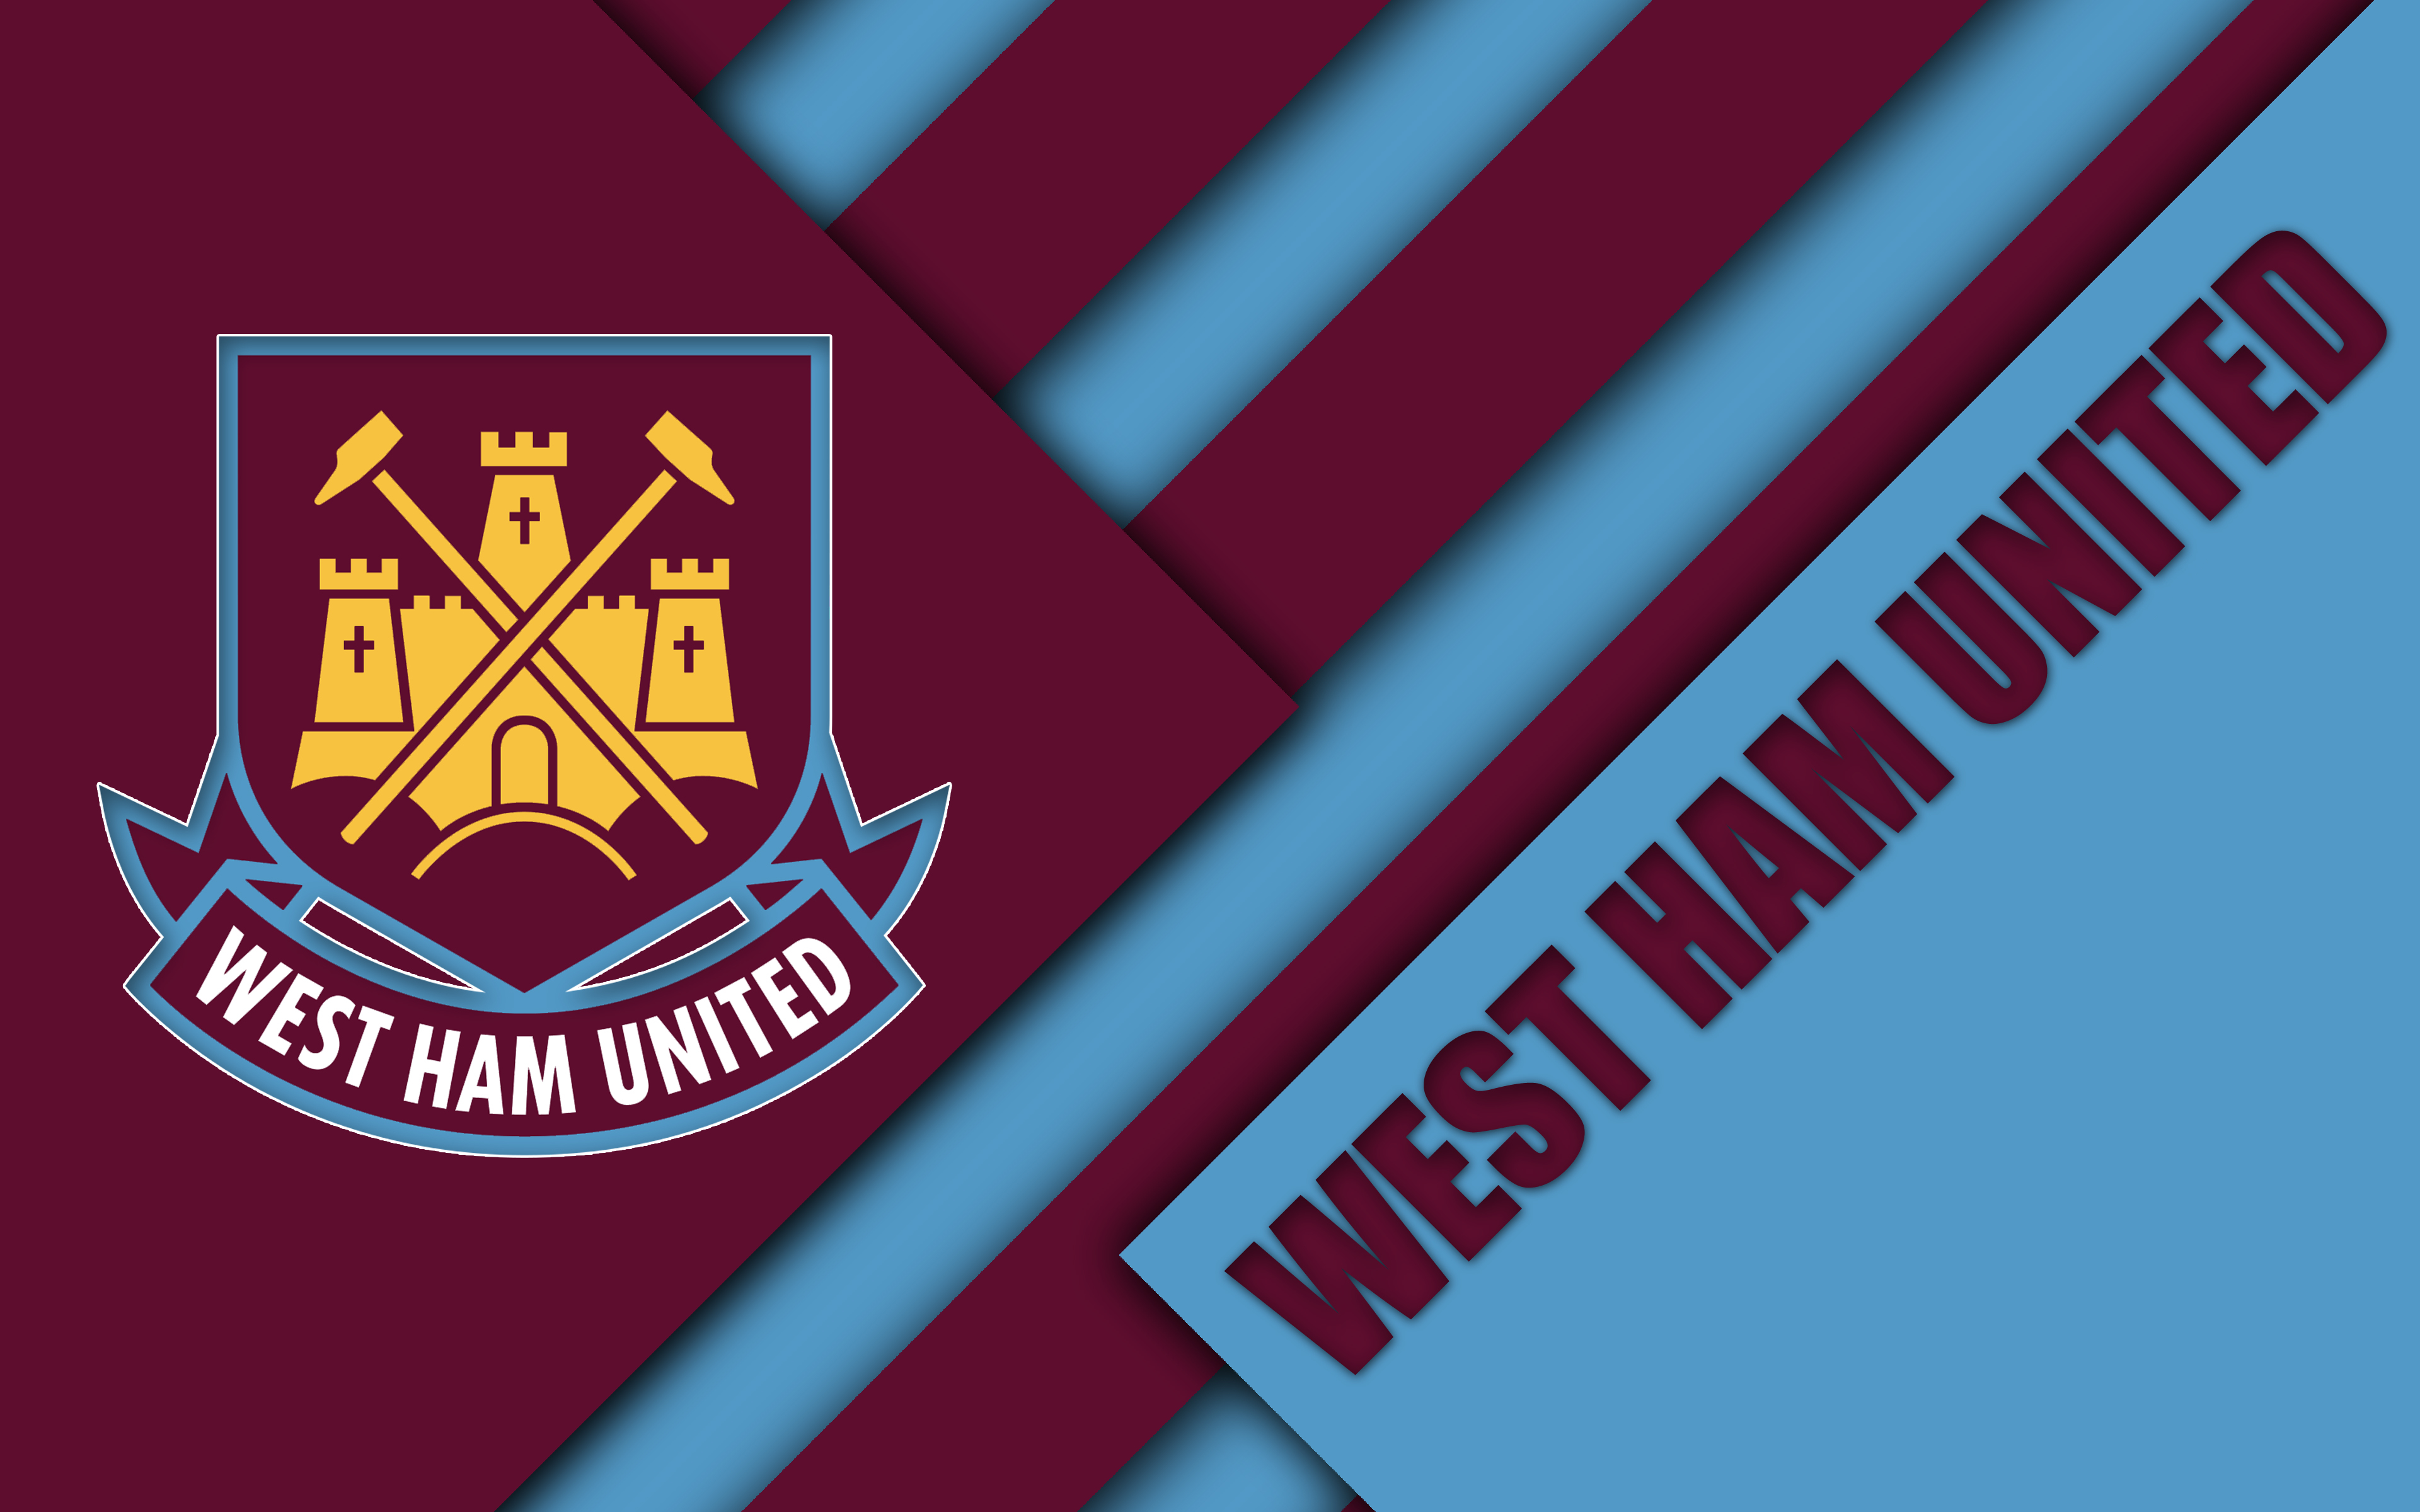 west ham united f c, sports, emblem, logo, soccer